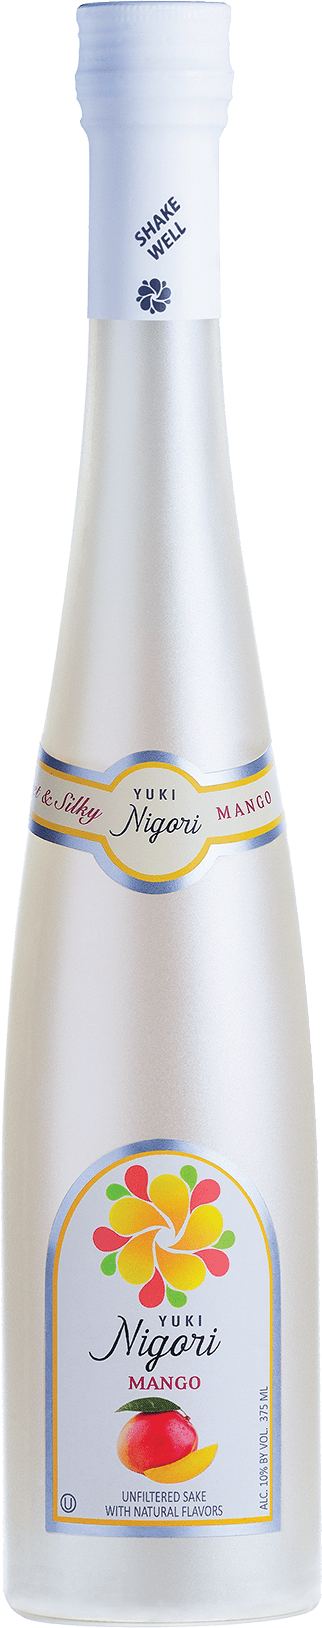 Wine Yuki Junmai Nigori Mango 375ml